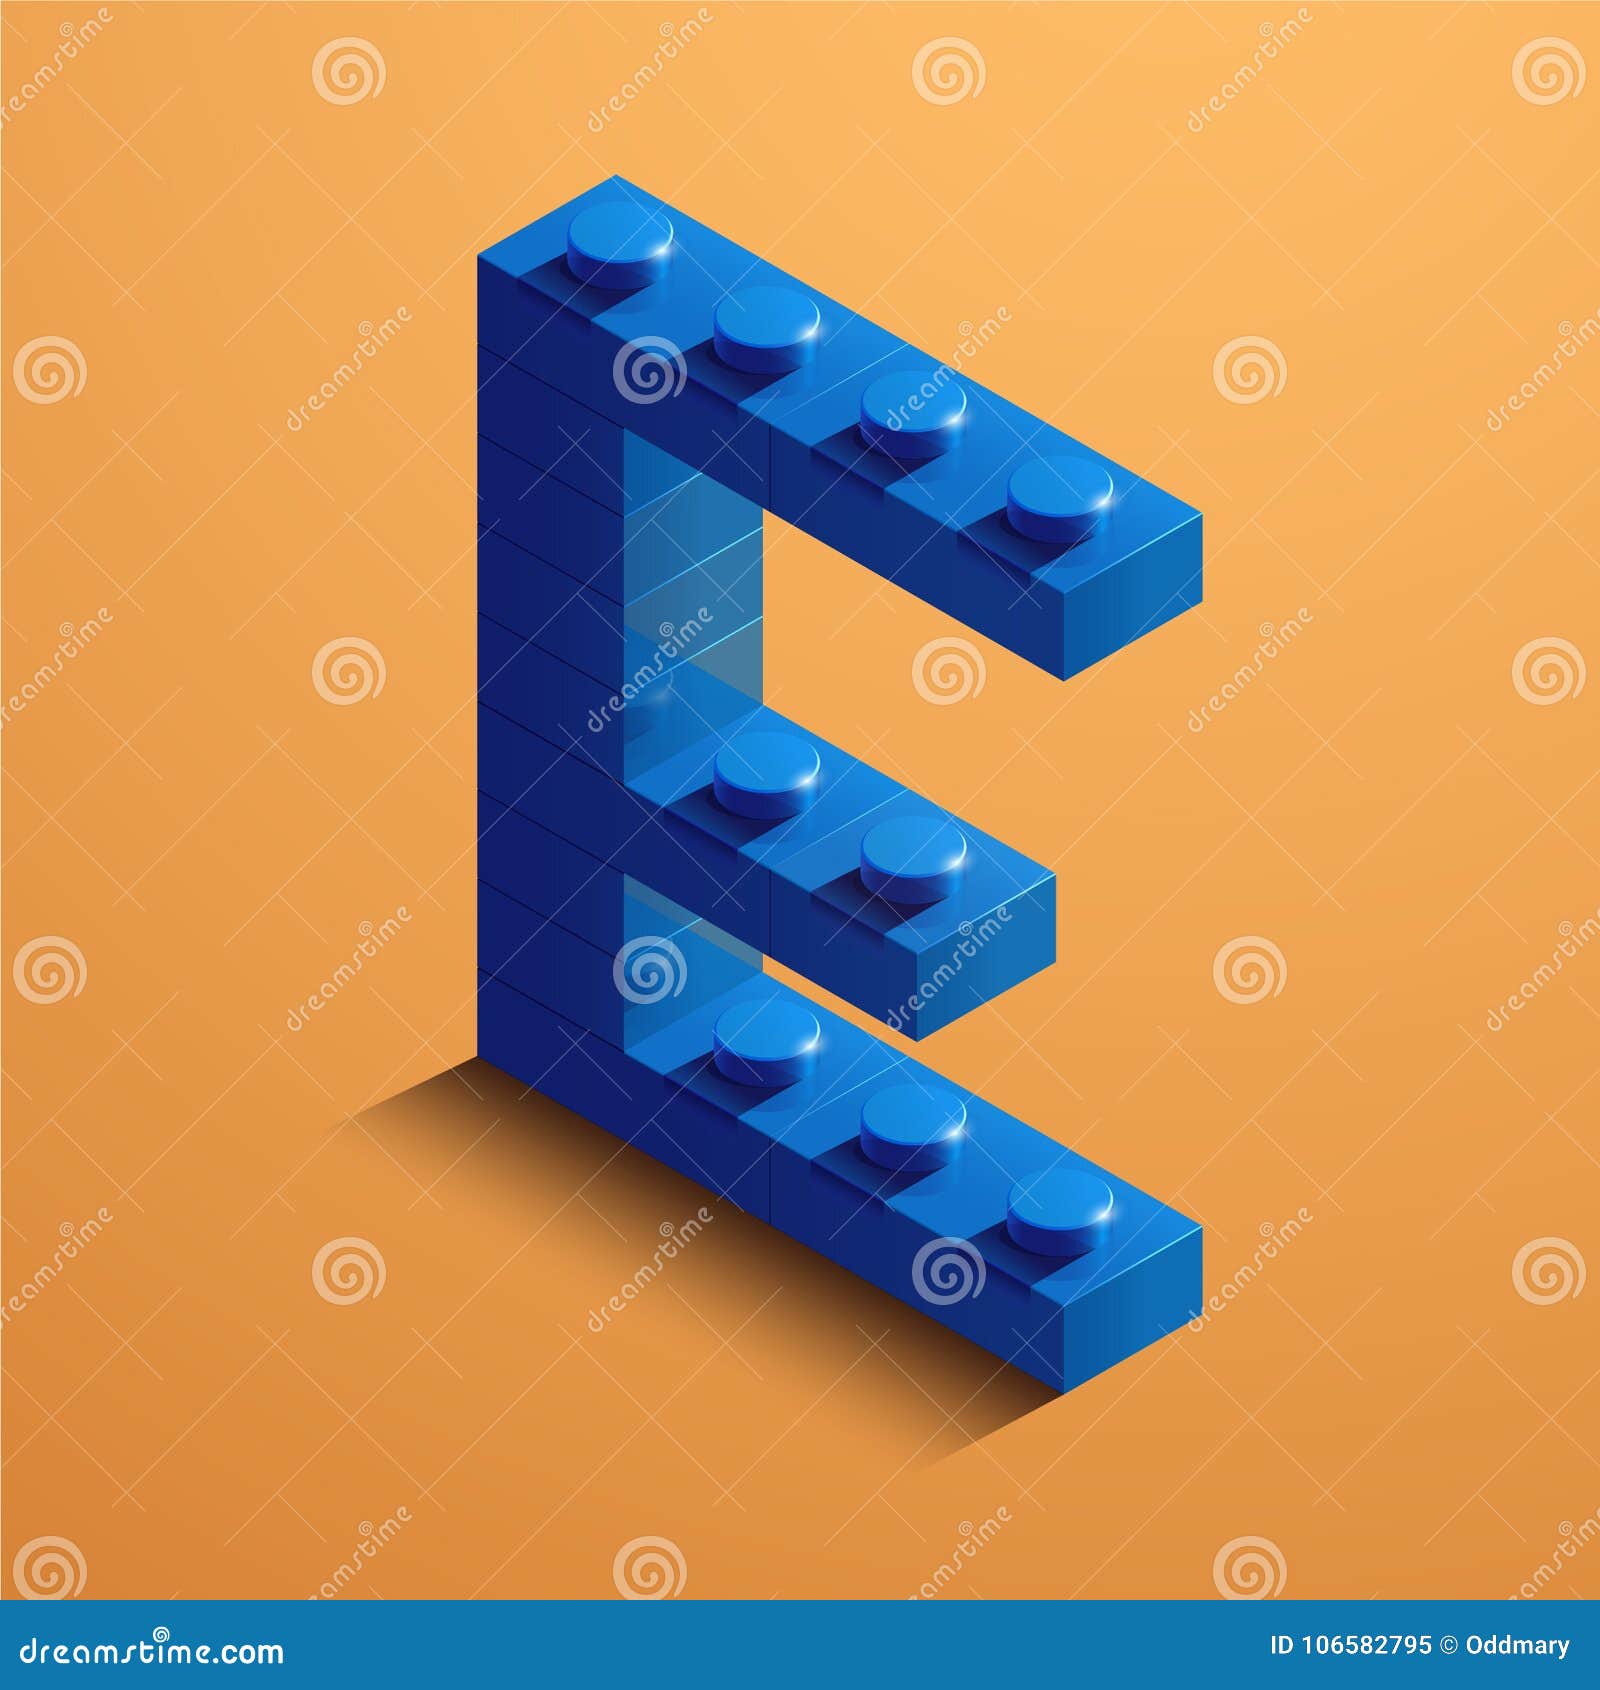 3d Isometric Letter E Of The Alphabet 3d Isometric Plastic Letter From The Constructor Blocks Stock Vector Illustration Of Fount Block